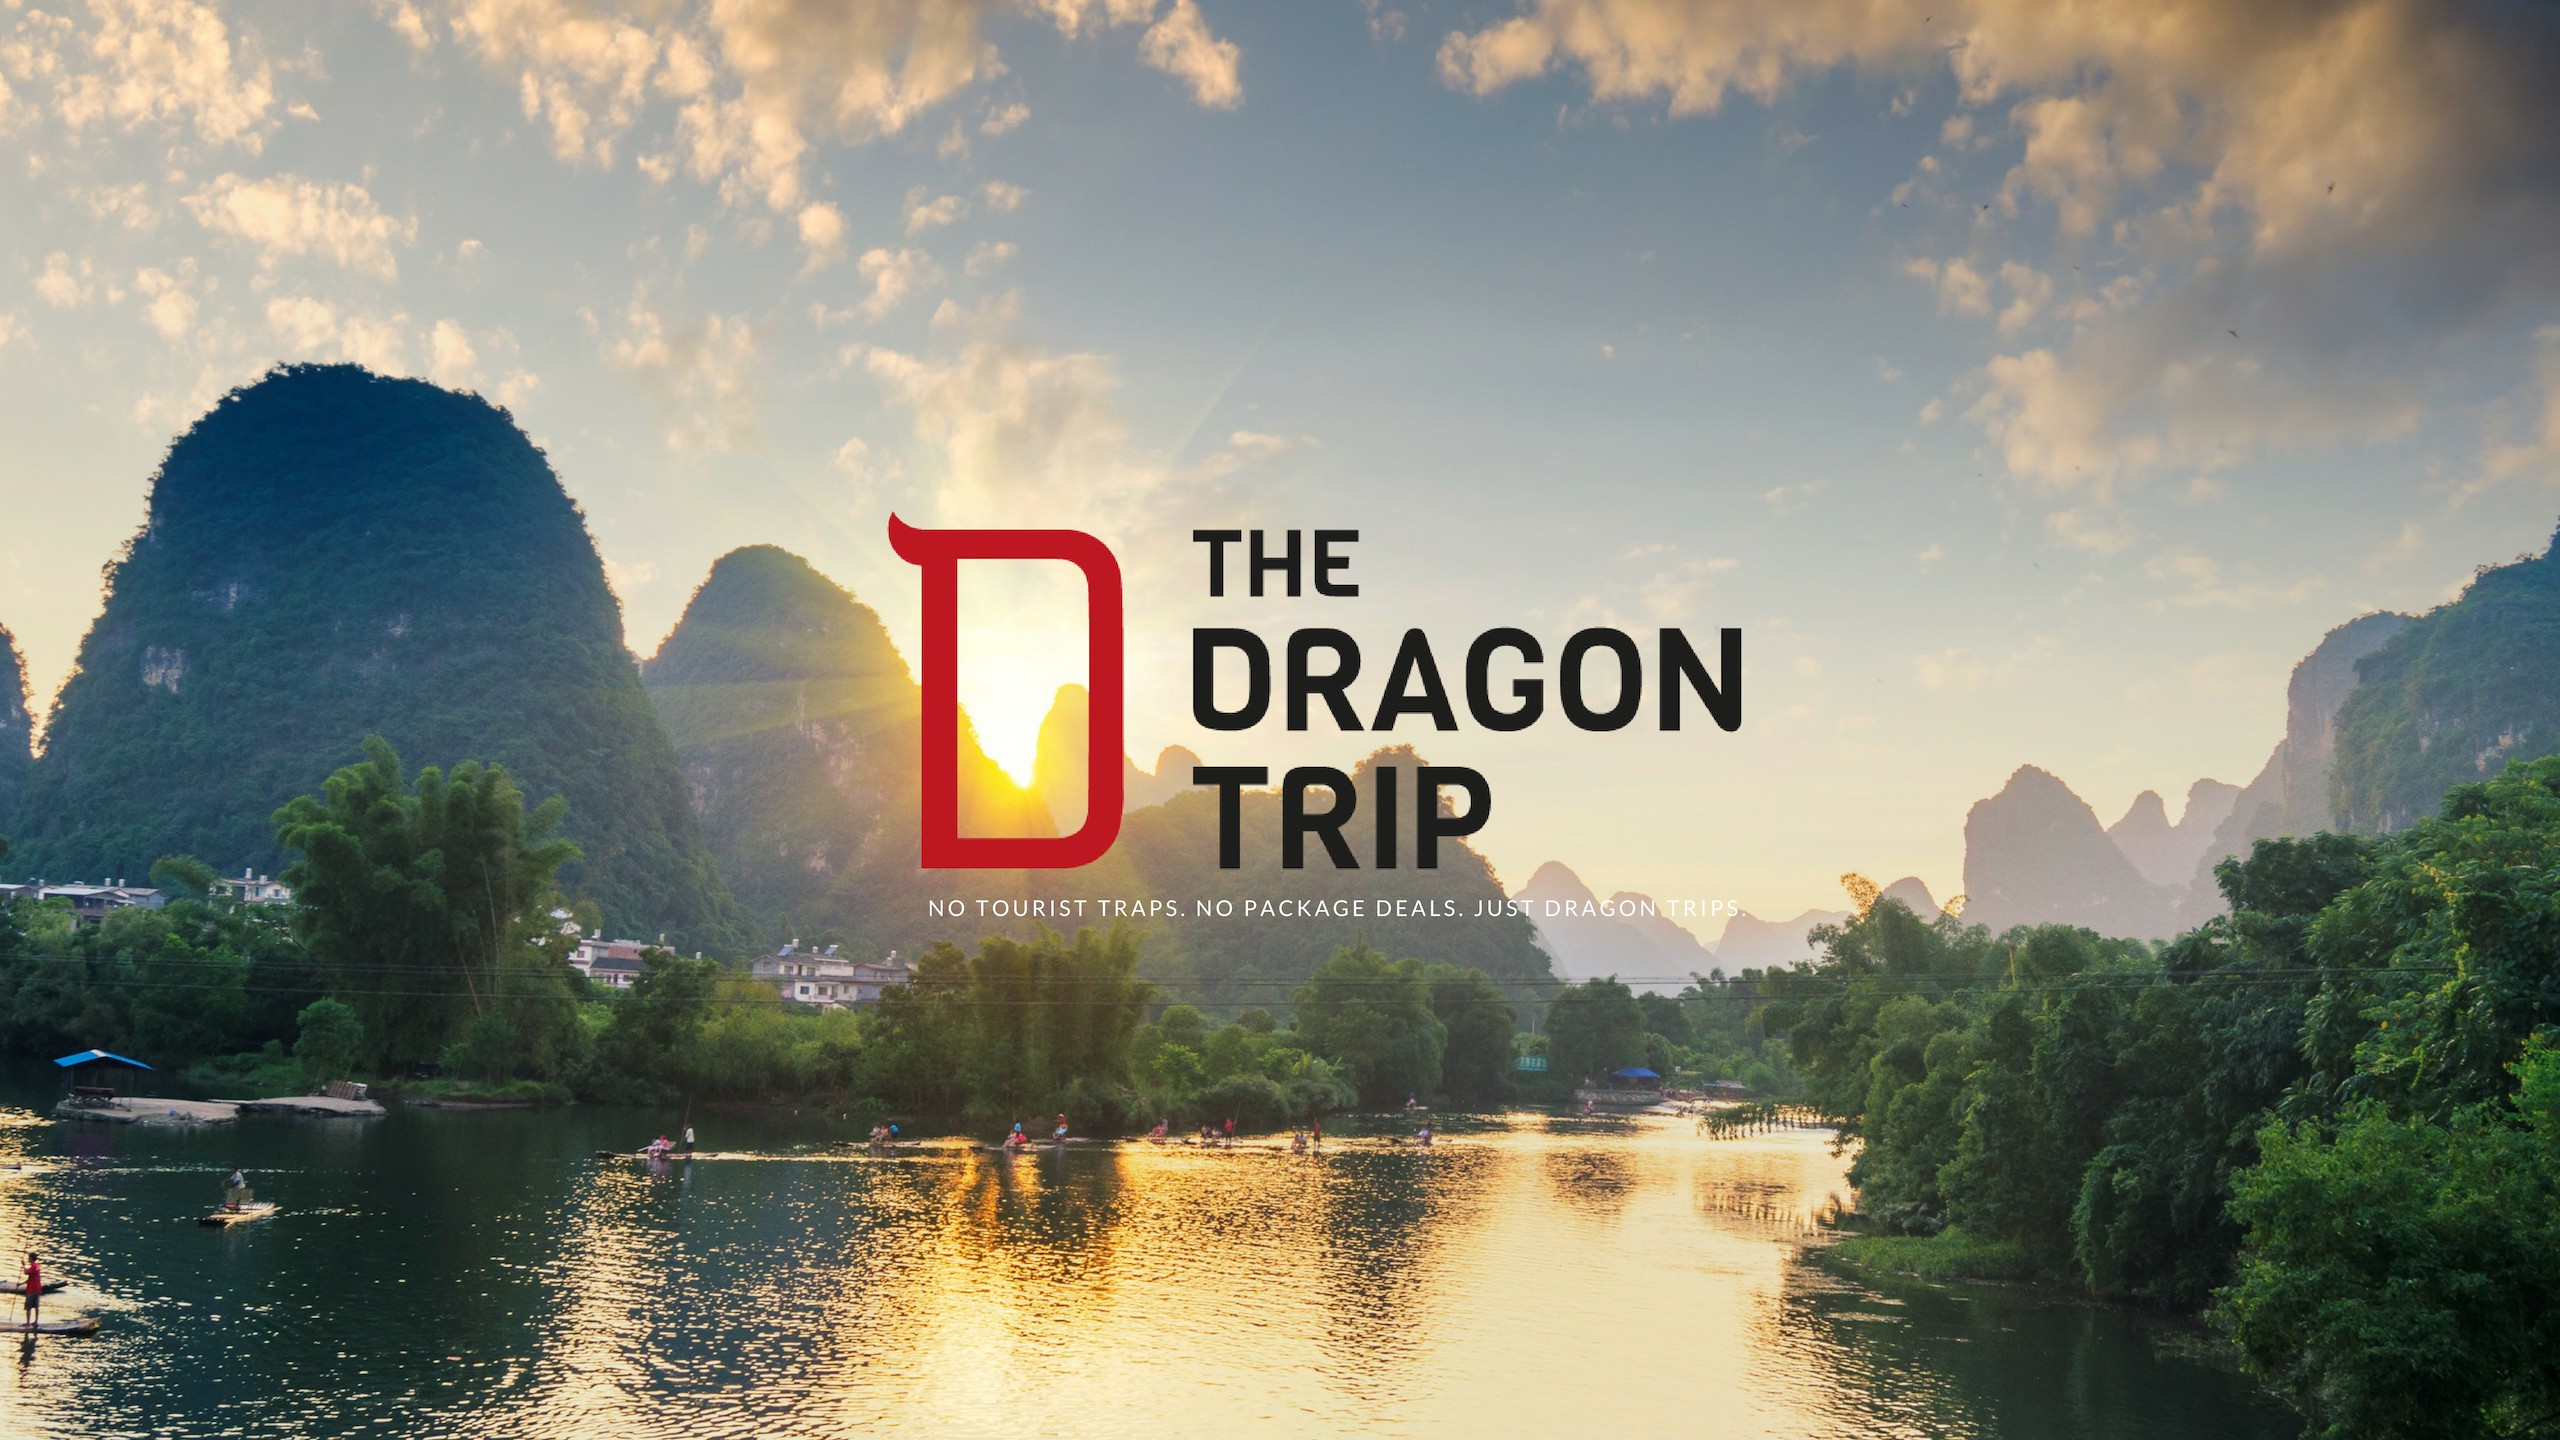 the dragon trip careers